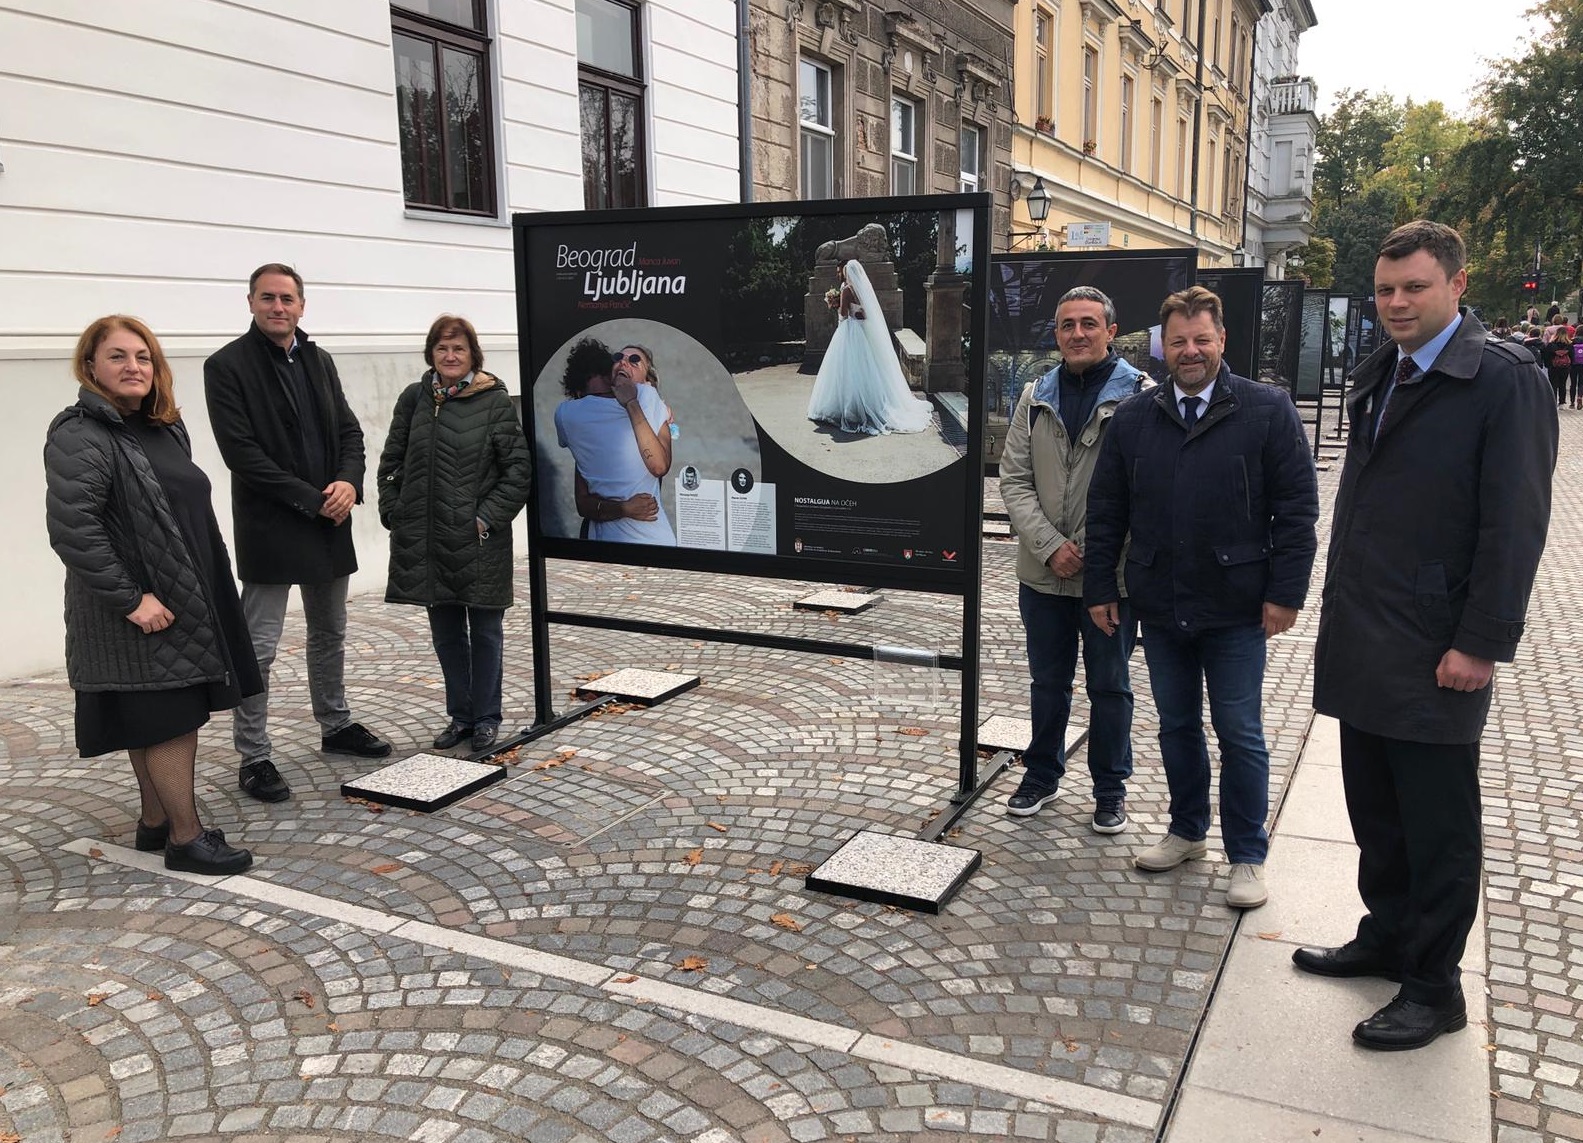 Exhibition ‘Applied Nostalgia’ opens in Ljubljana